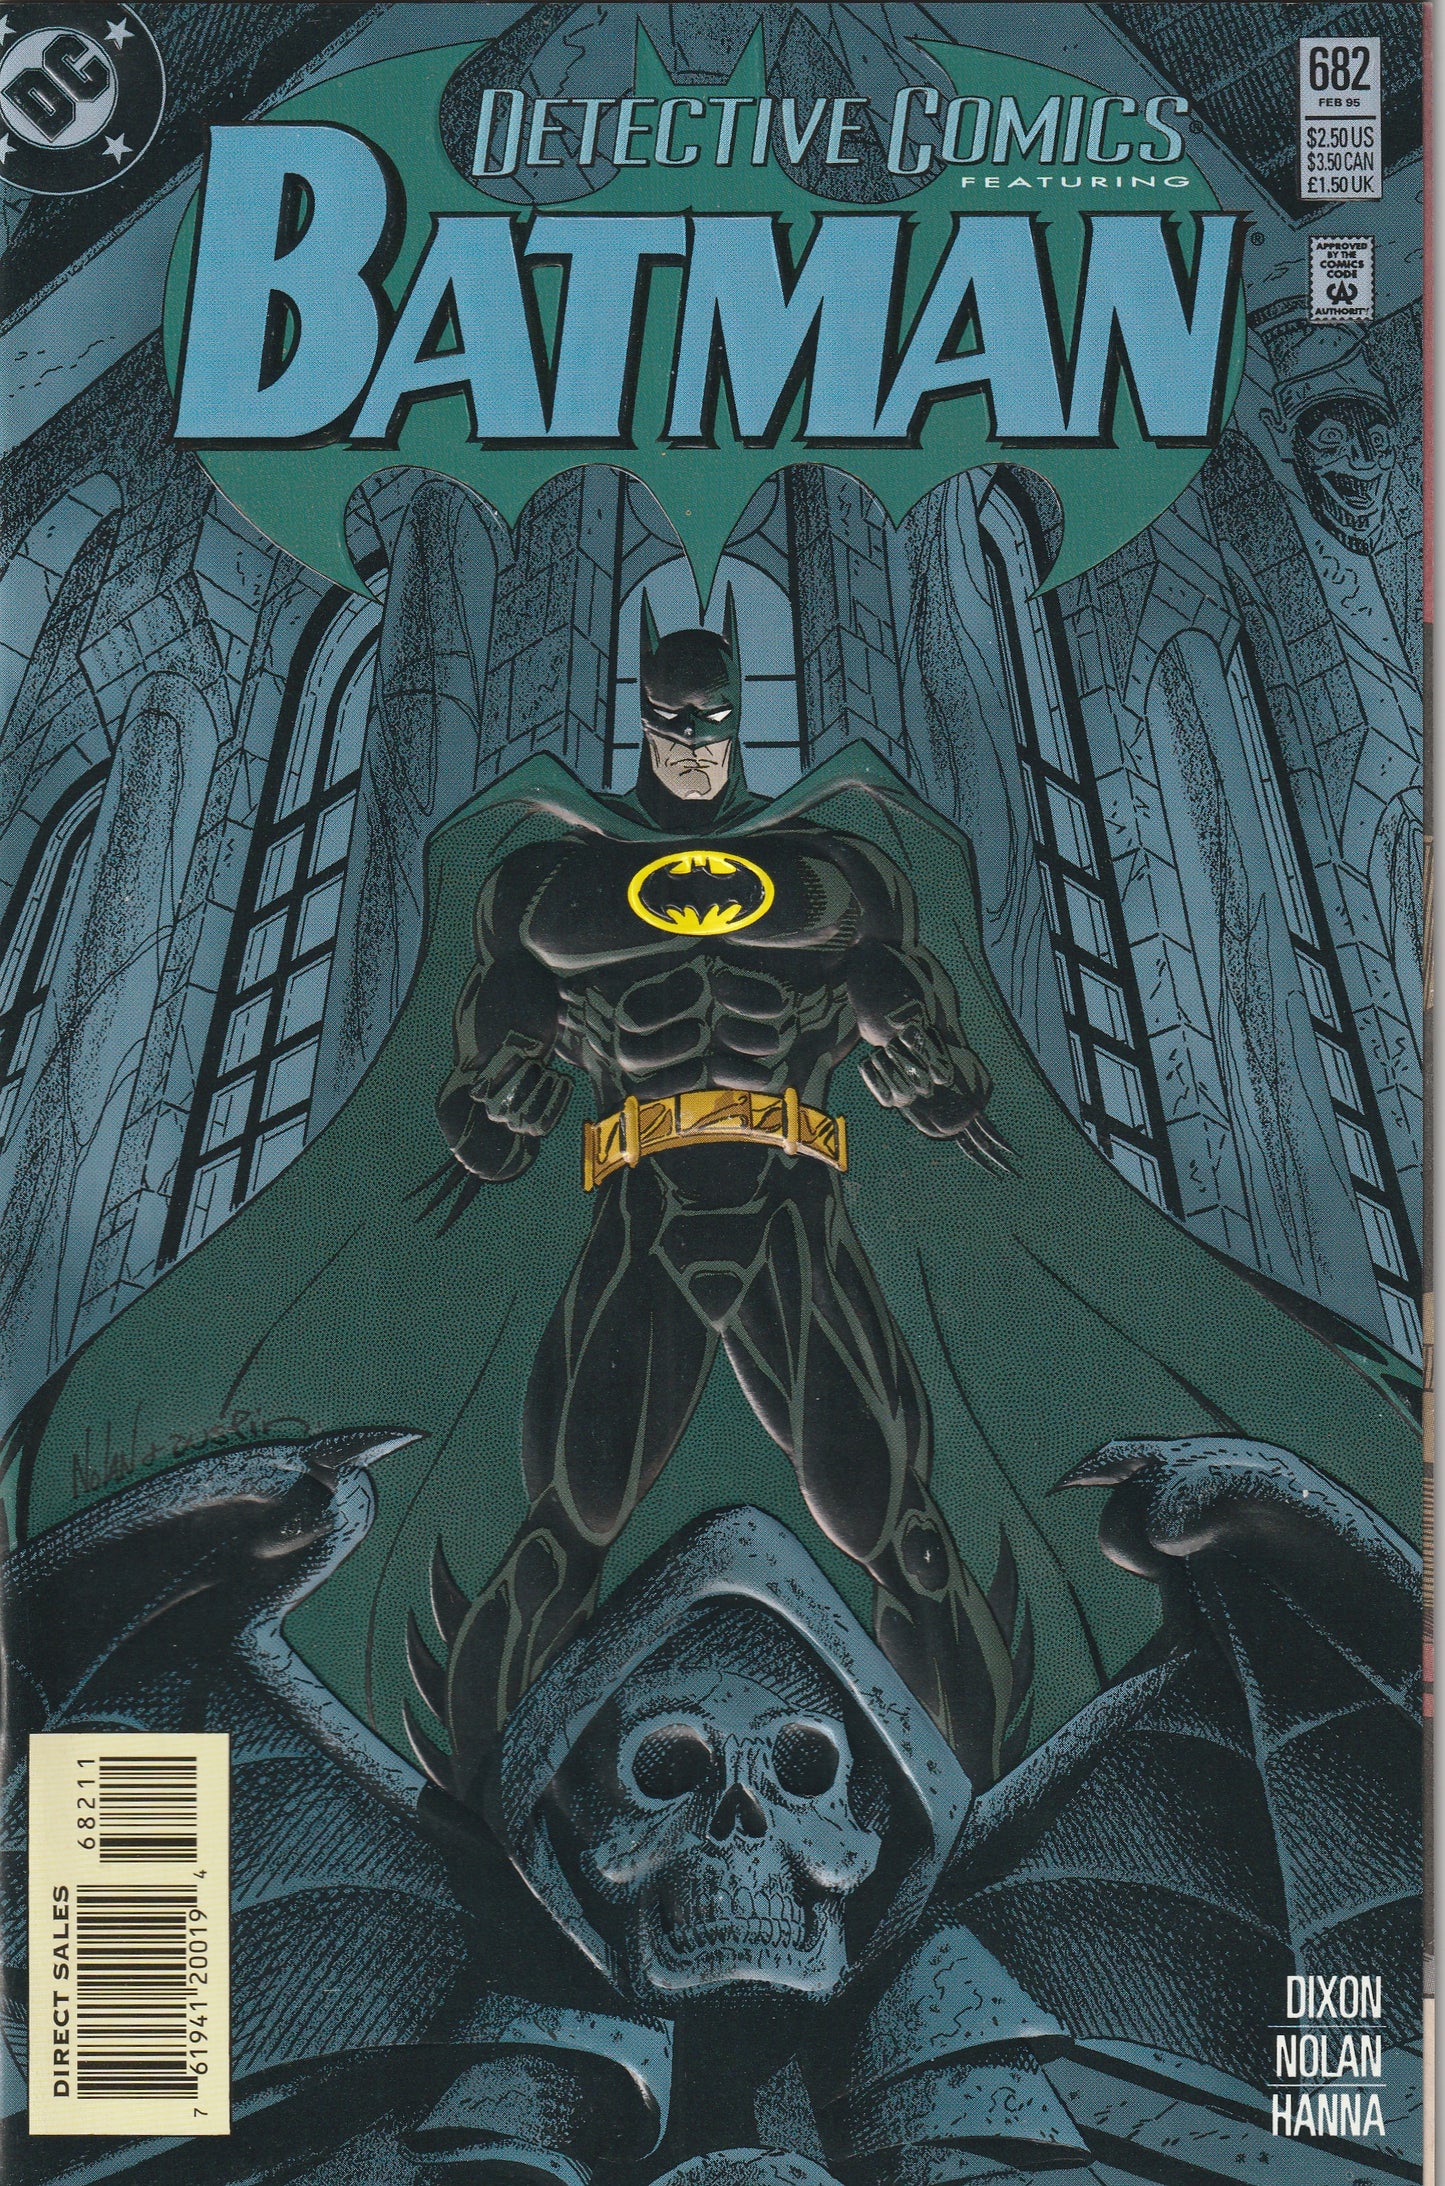 Detective Comics #682 (1995) - Embossed cover